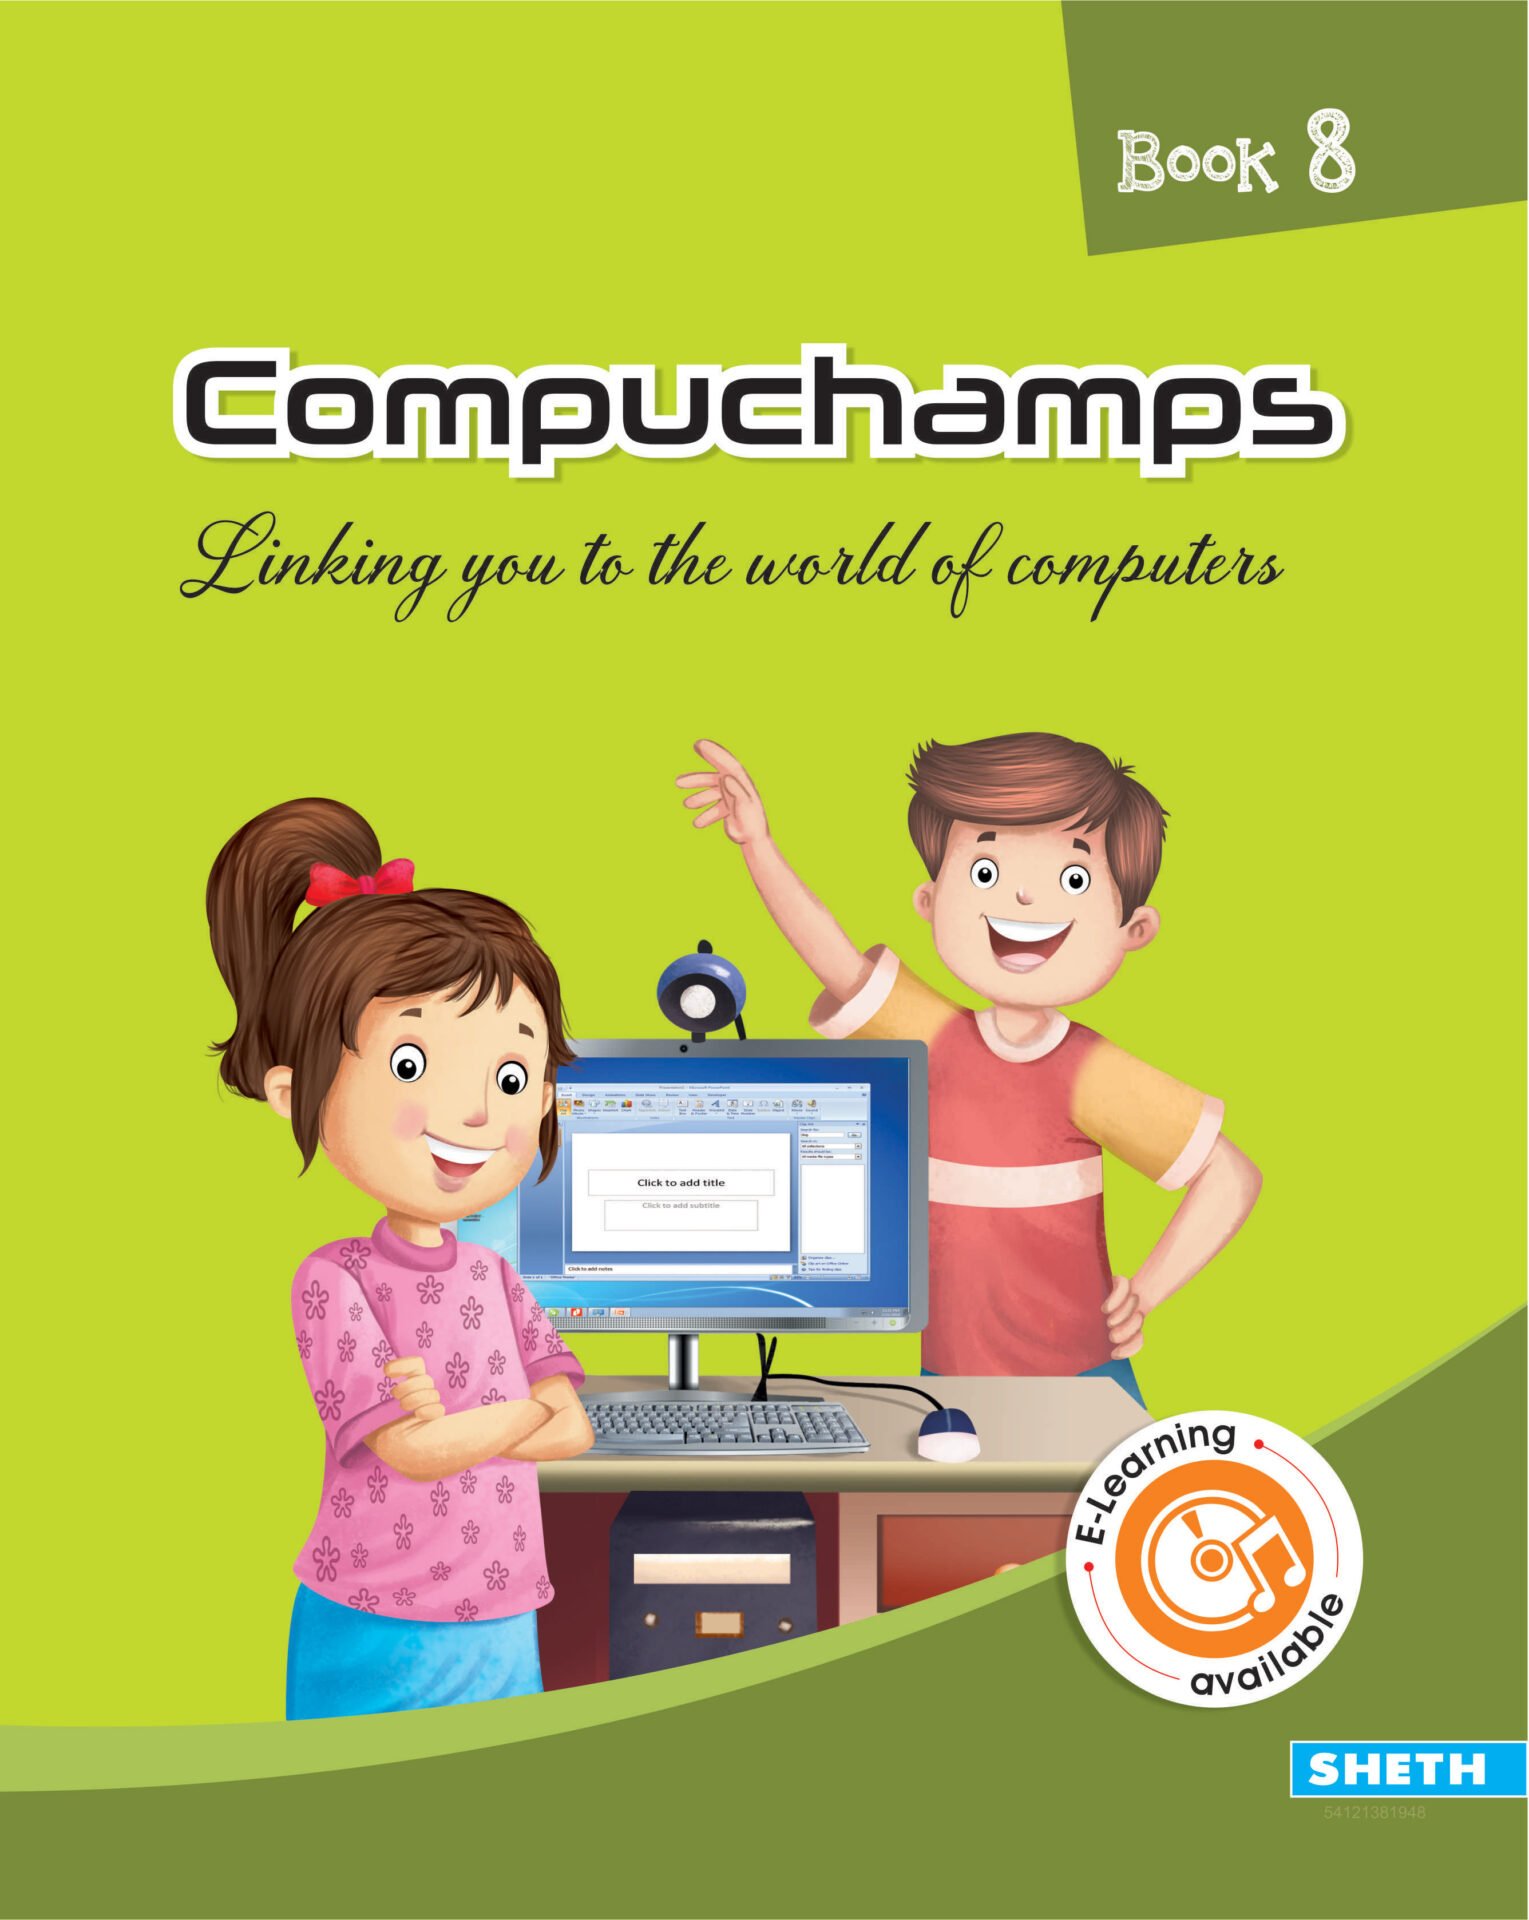 Compuchamps Book 8 1 1